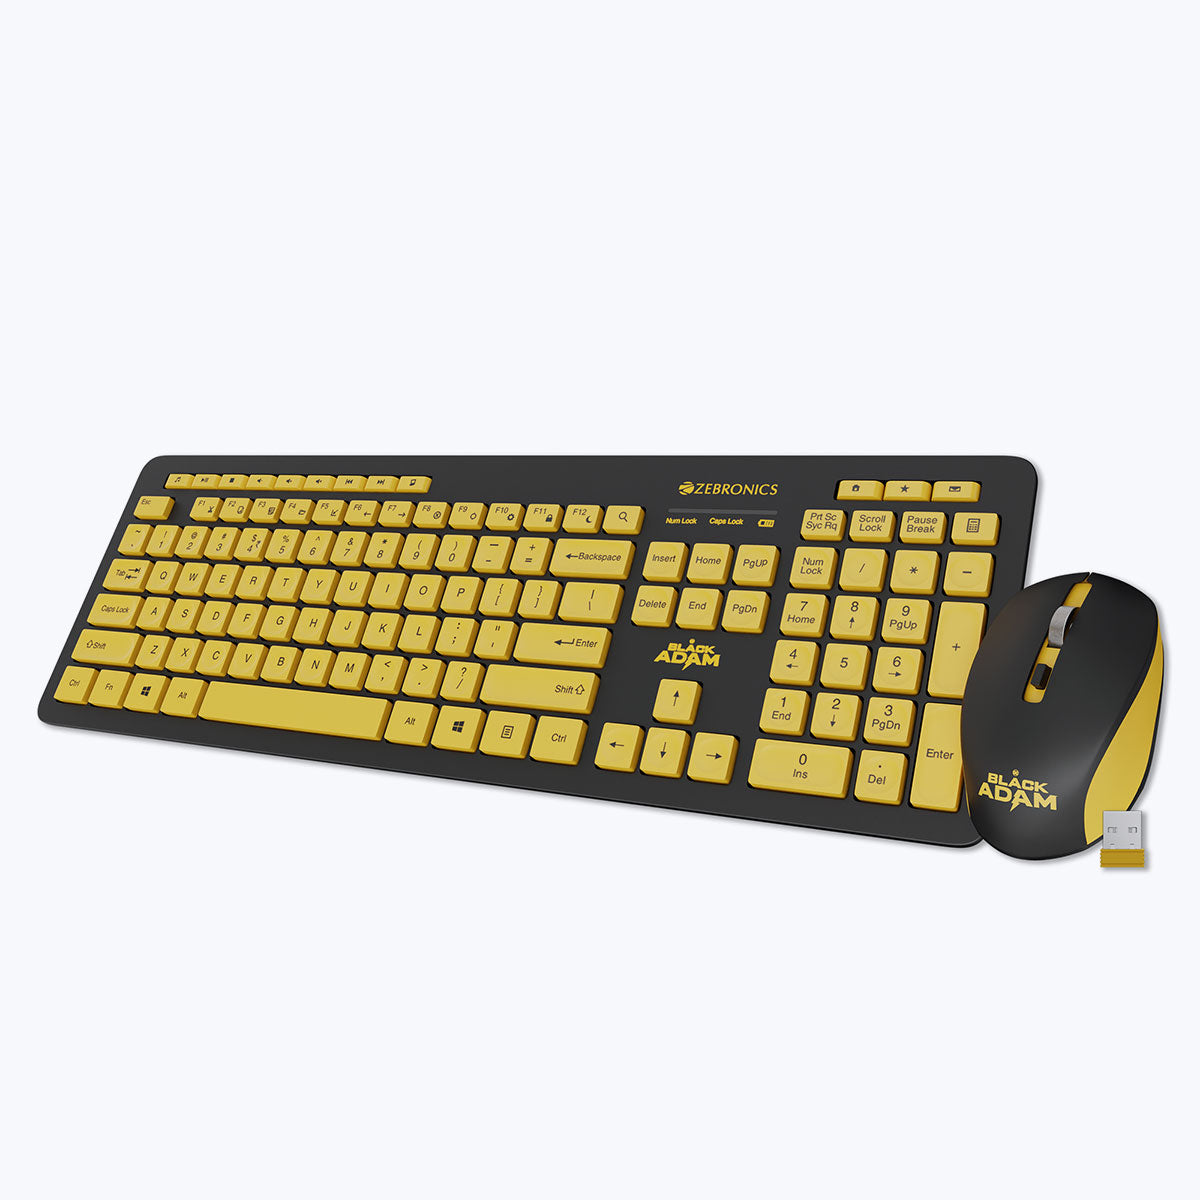 Zeb-Companion 500 - keyboard and mouse combo - Zebronics